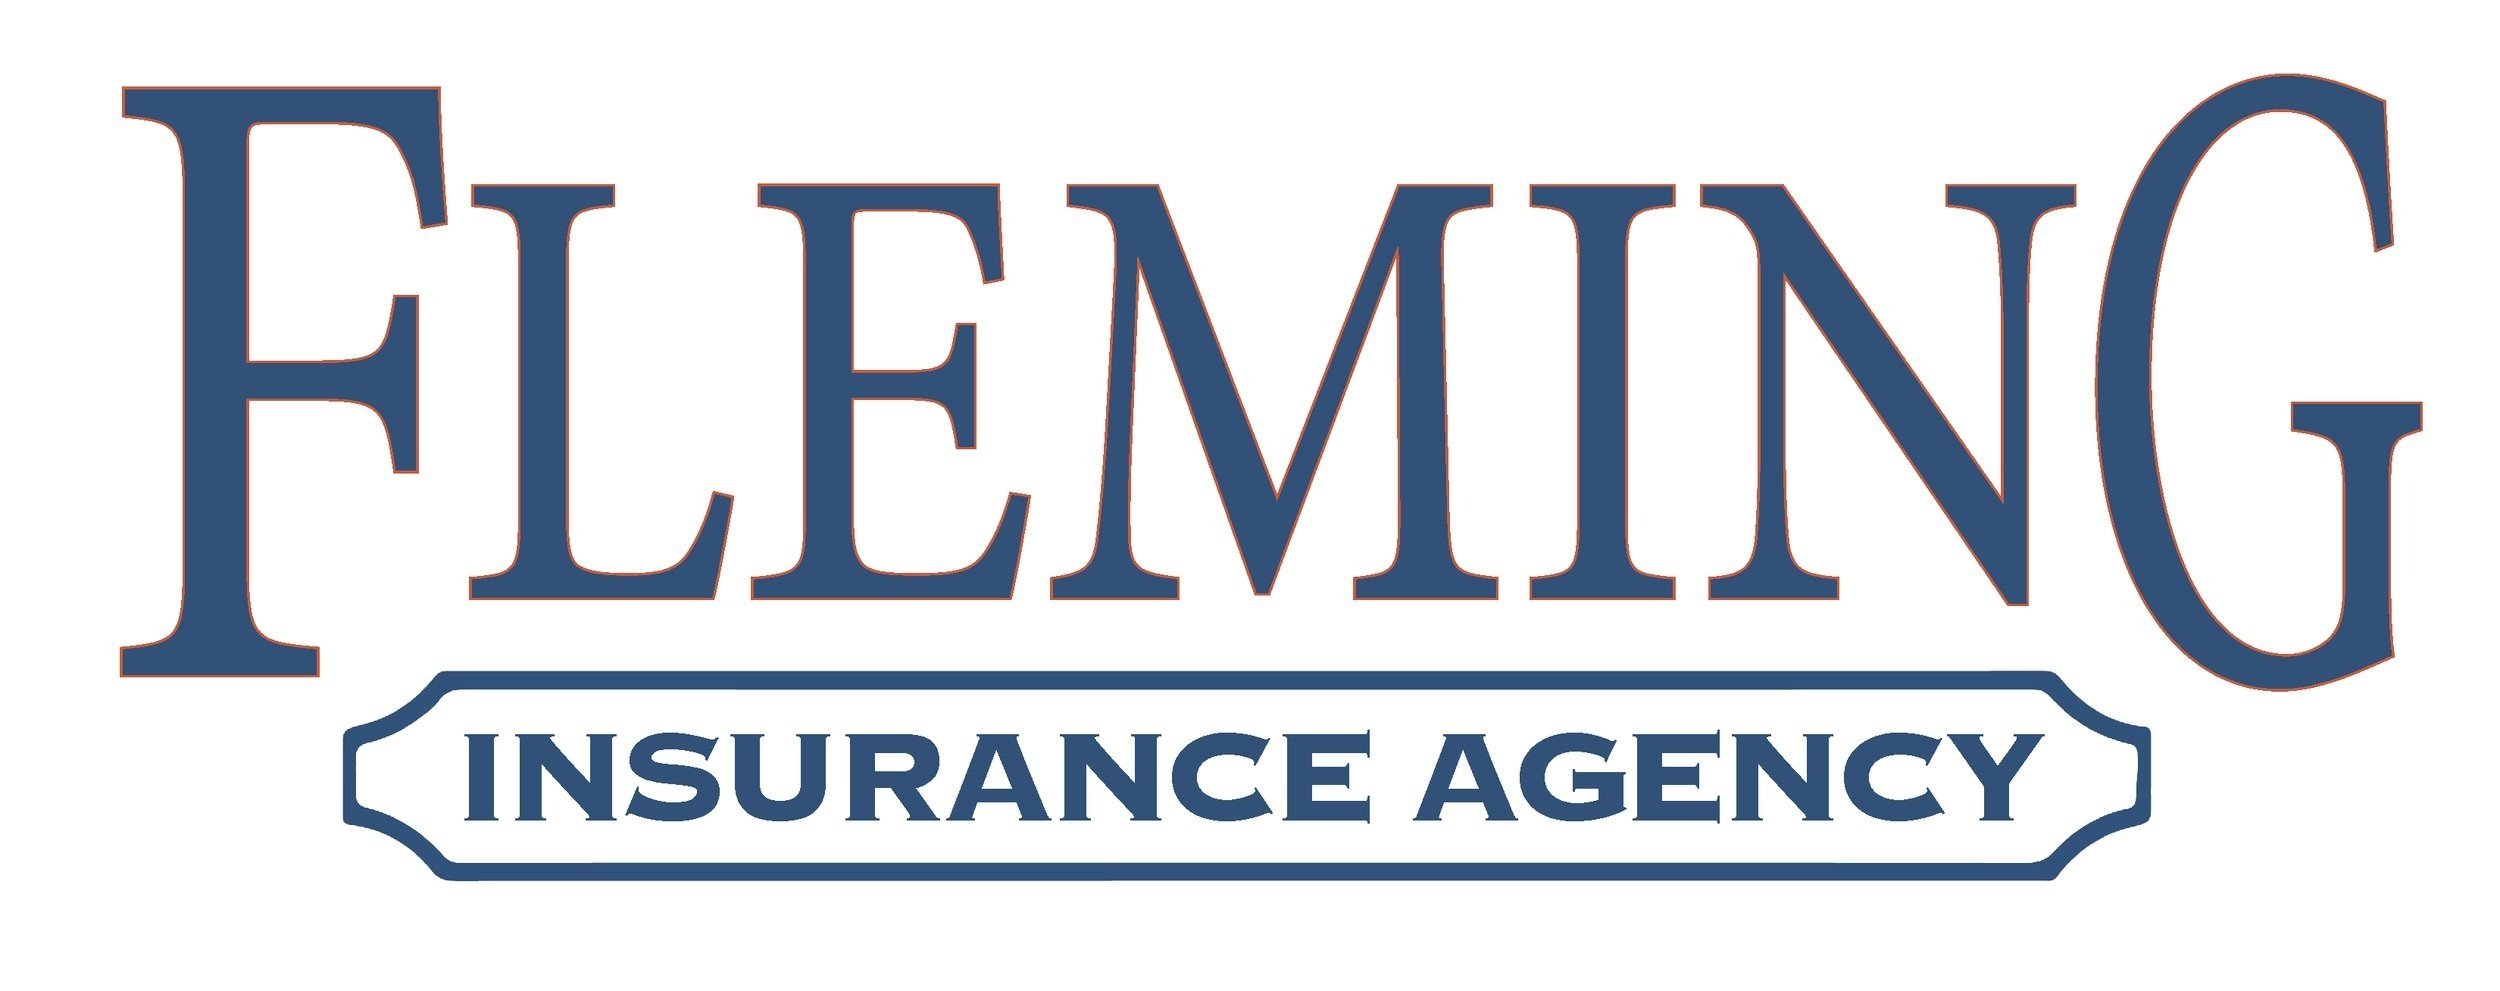 Fleming Insurance